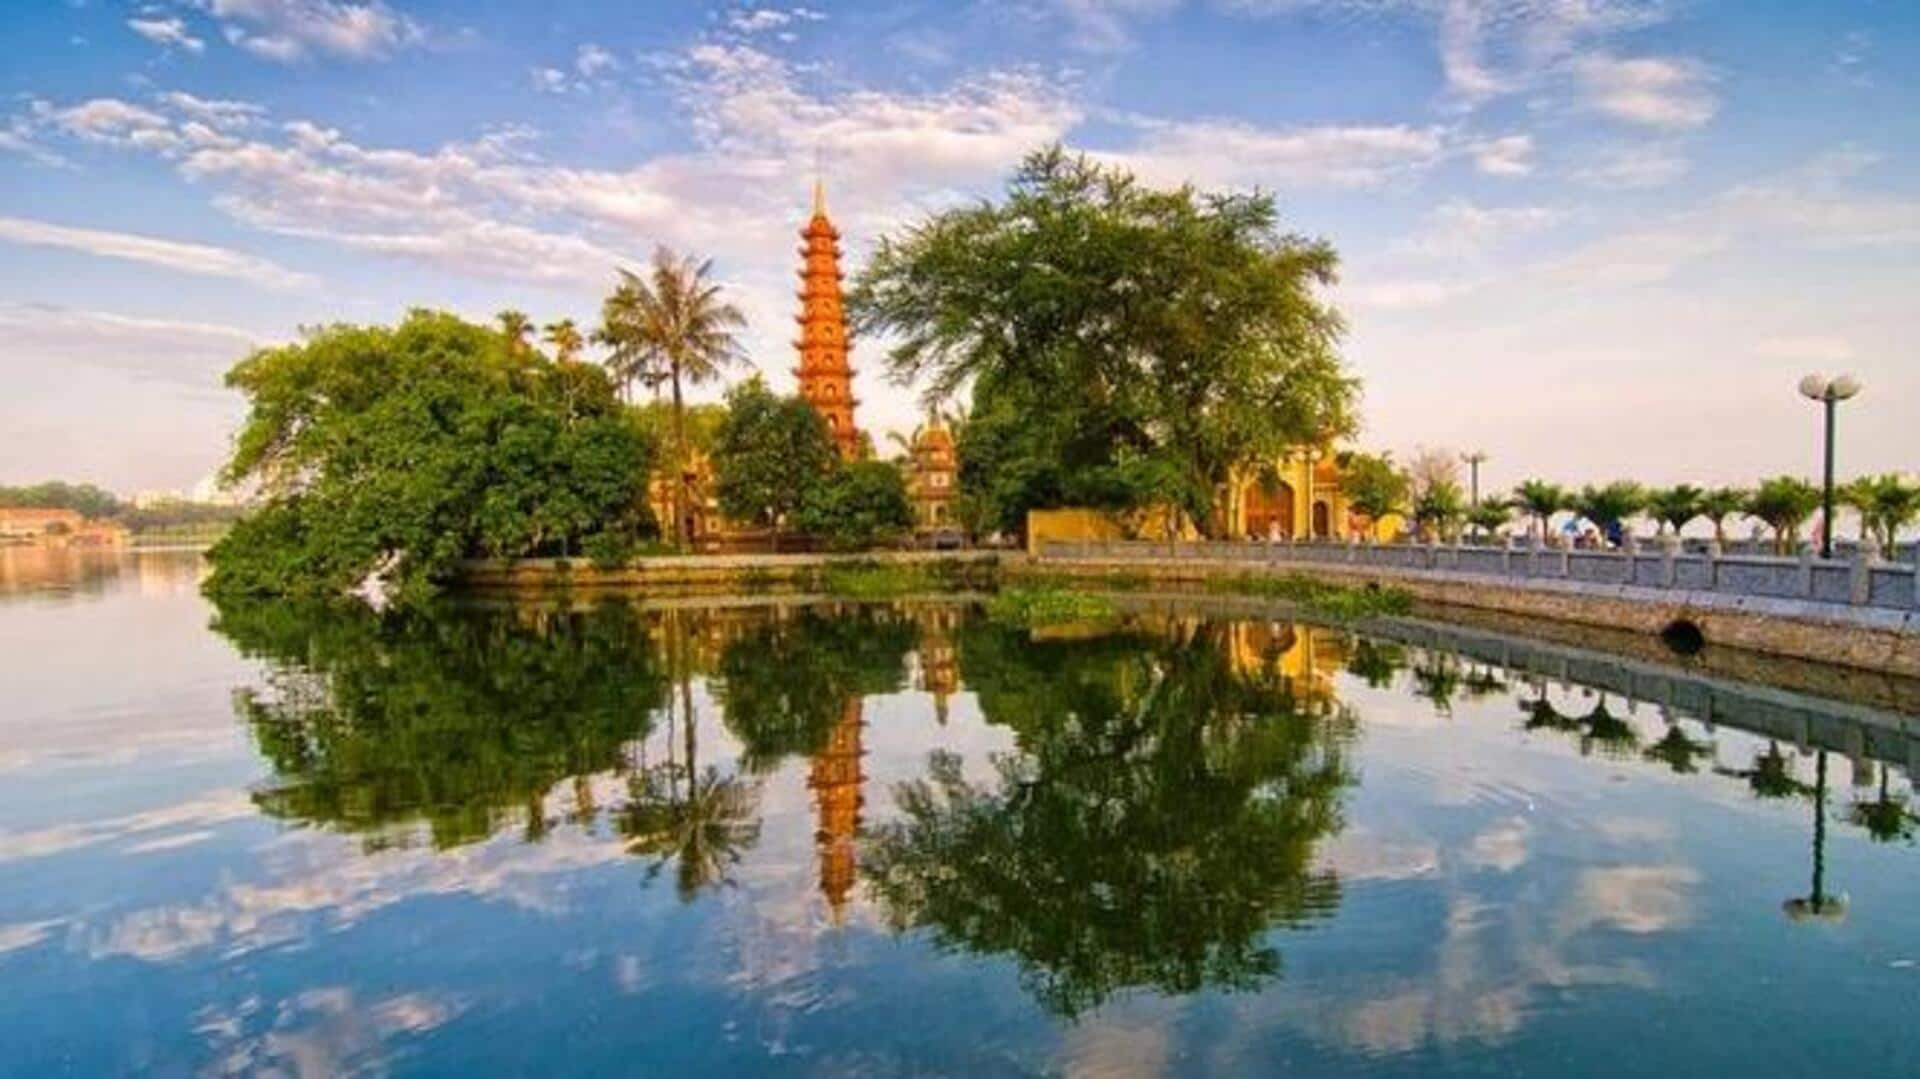 Visit Hanoi's popular lakeside pagodas